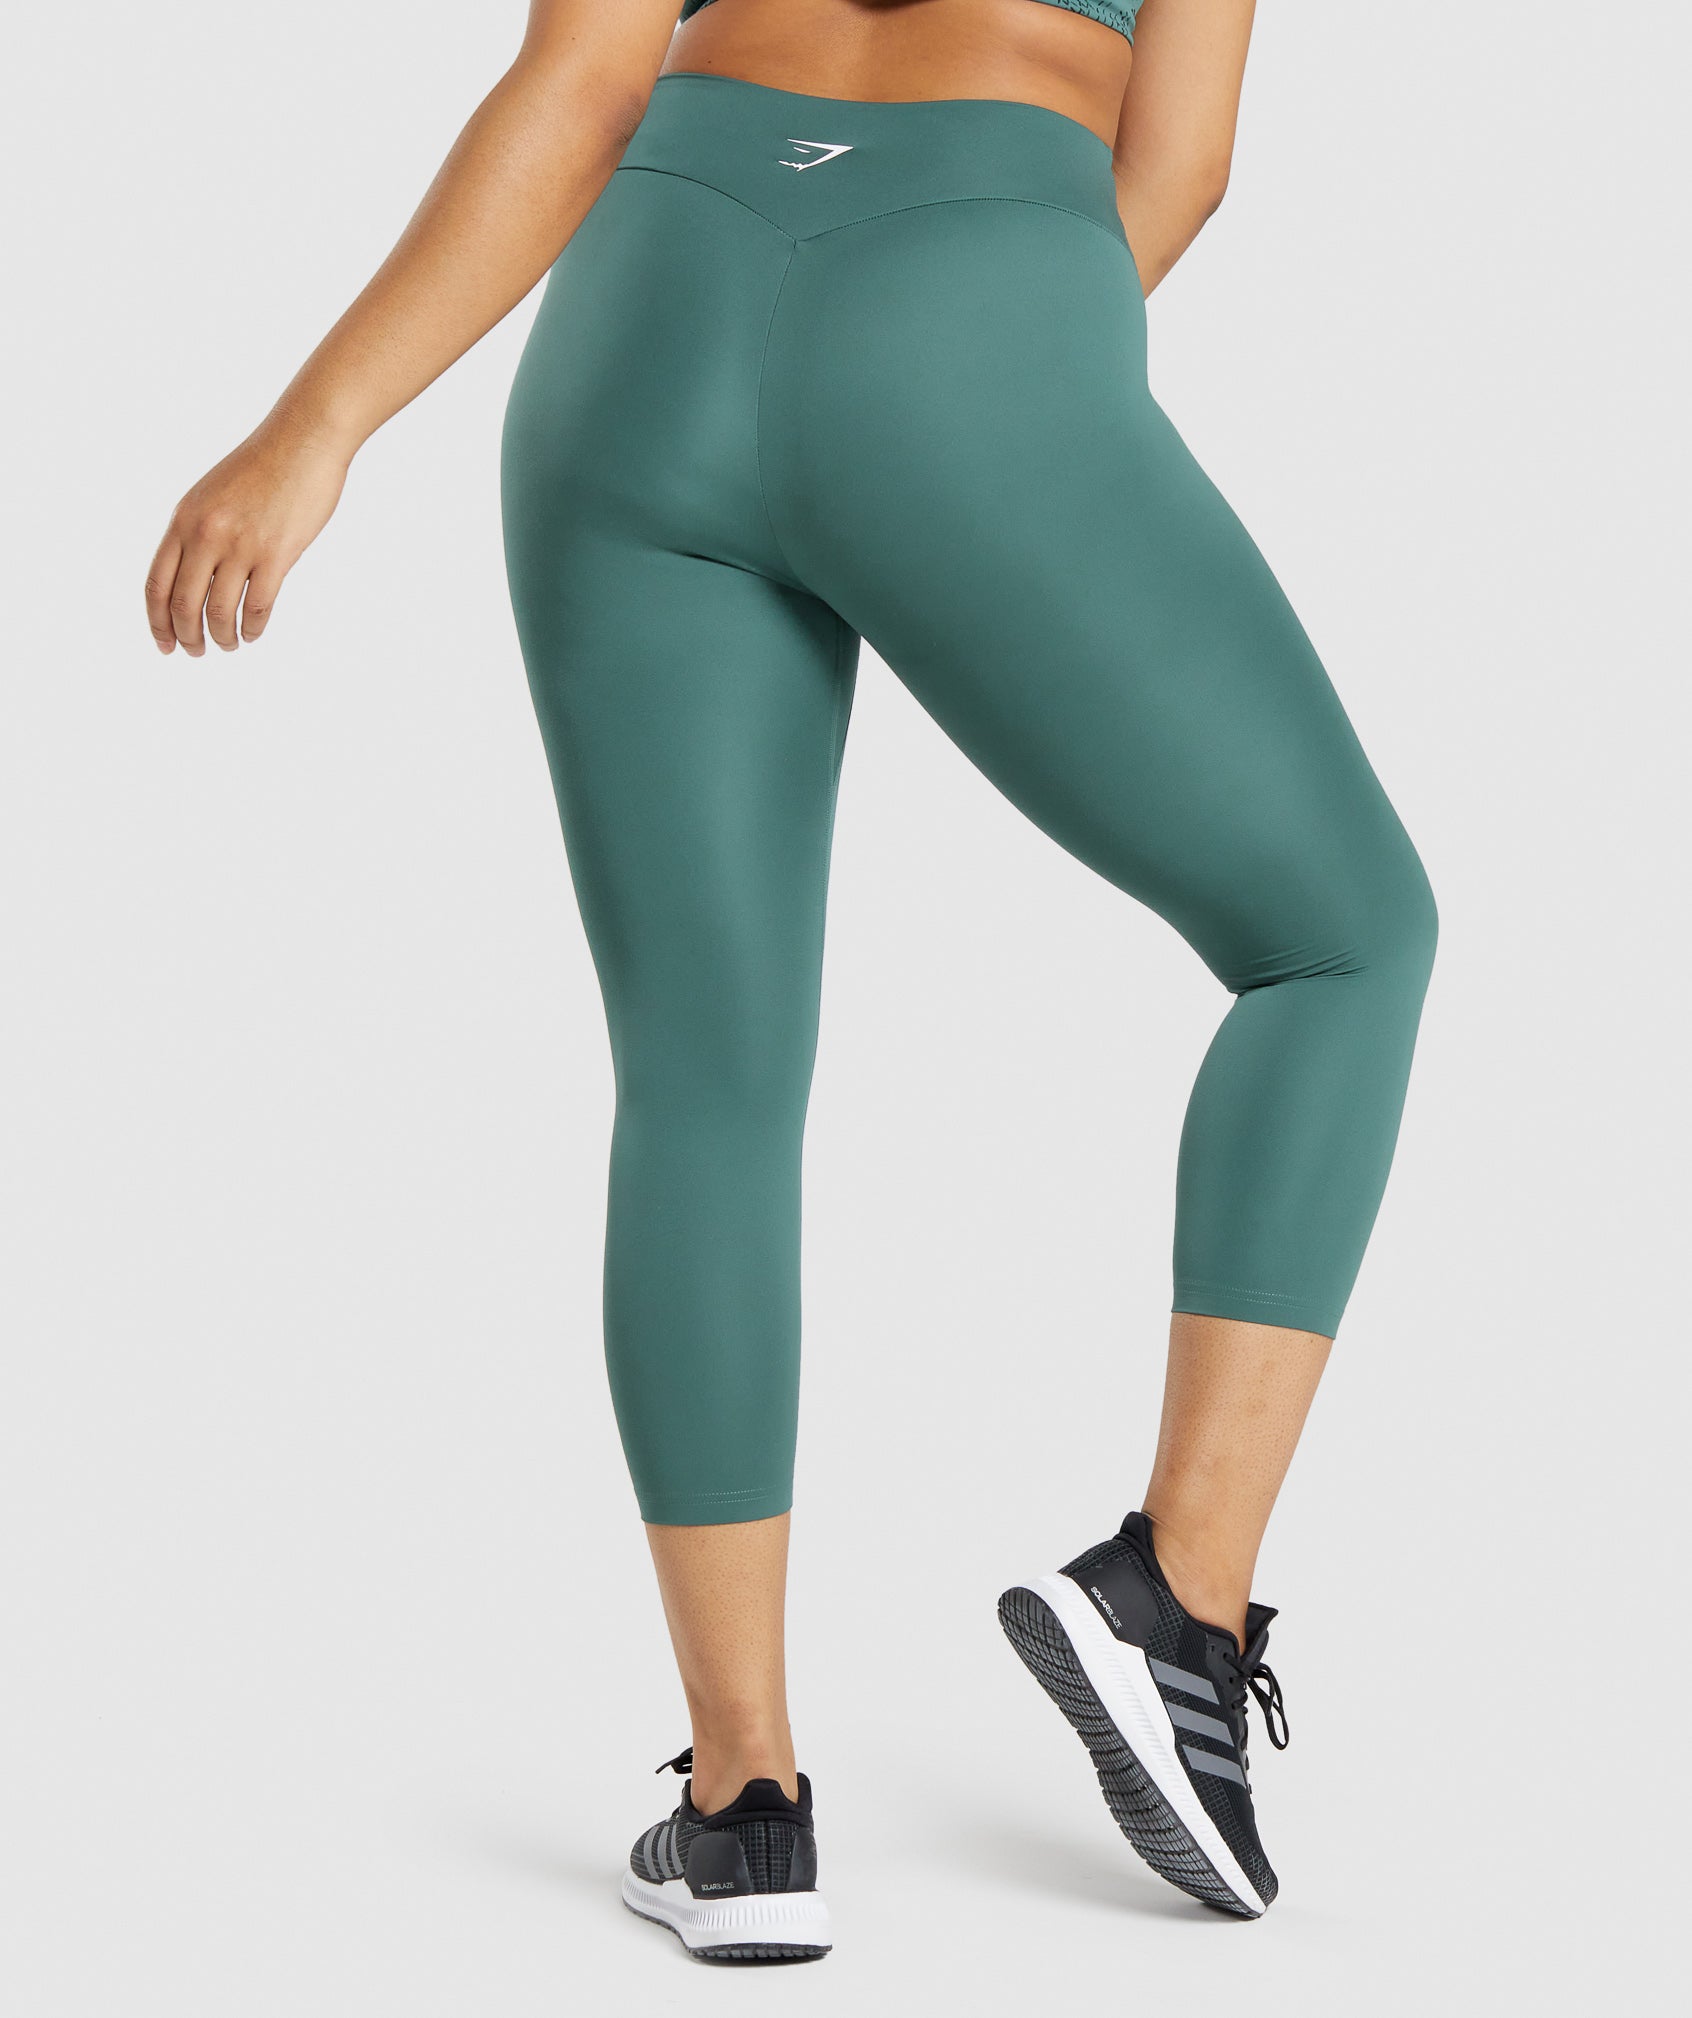 New gymshark x KK FIT 7/8th leggings. Size XS. Color